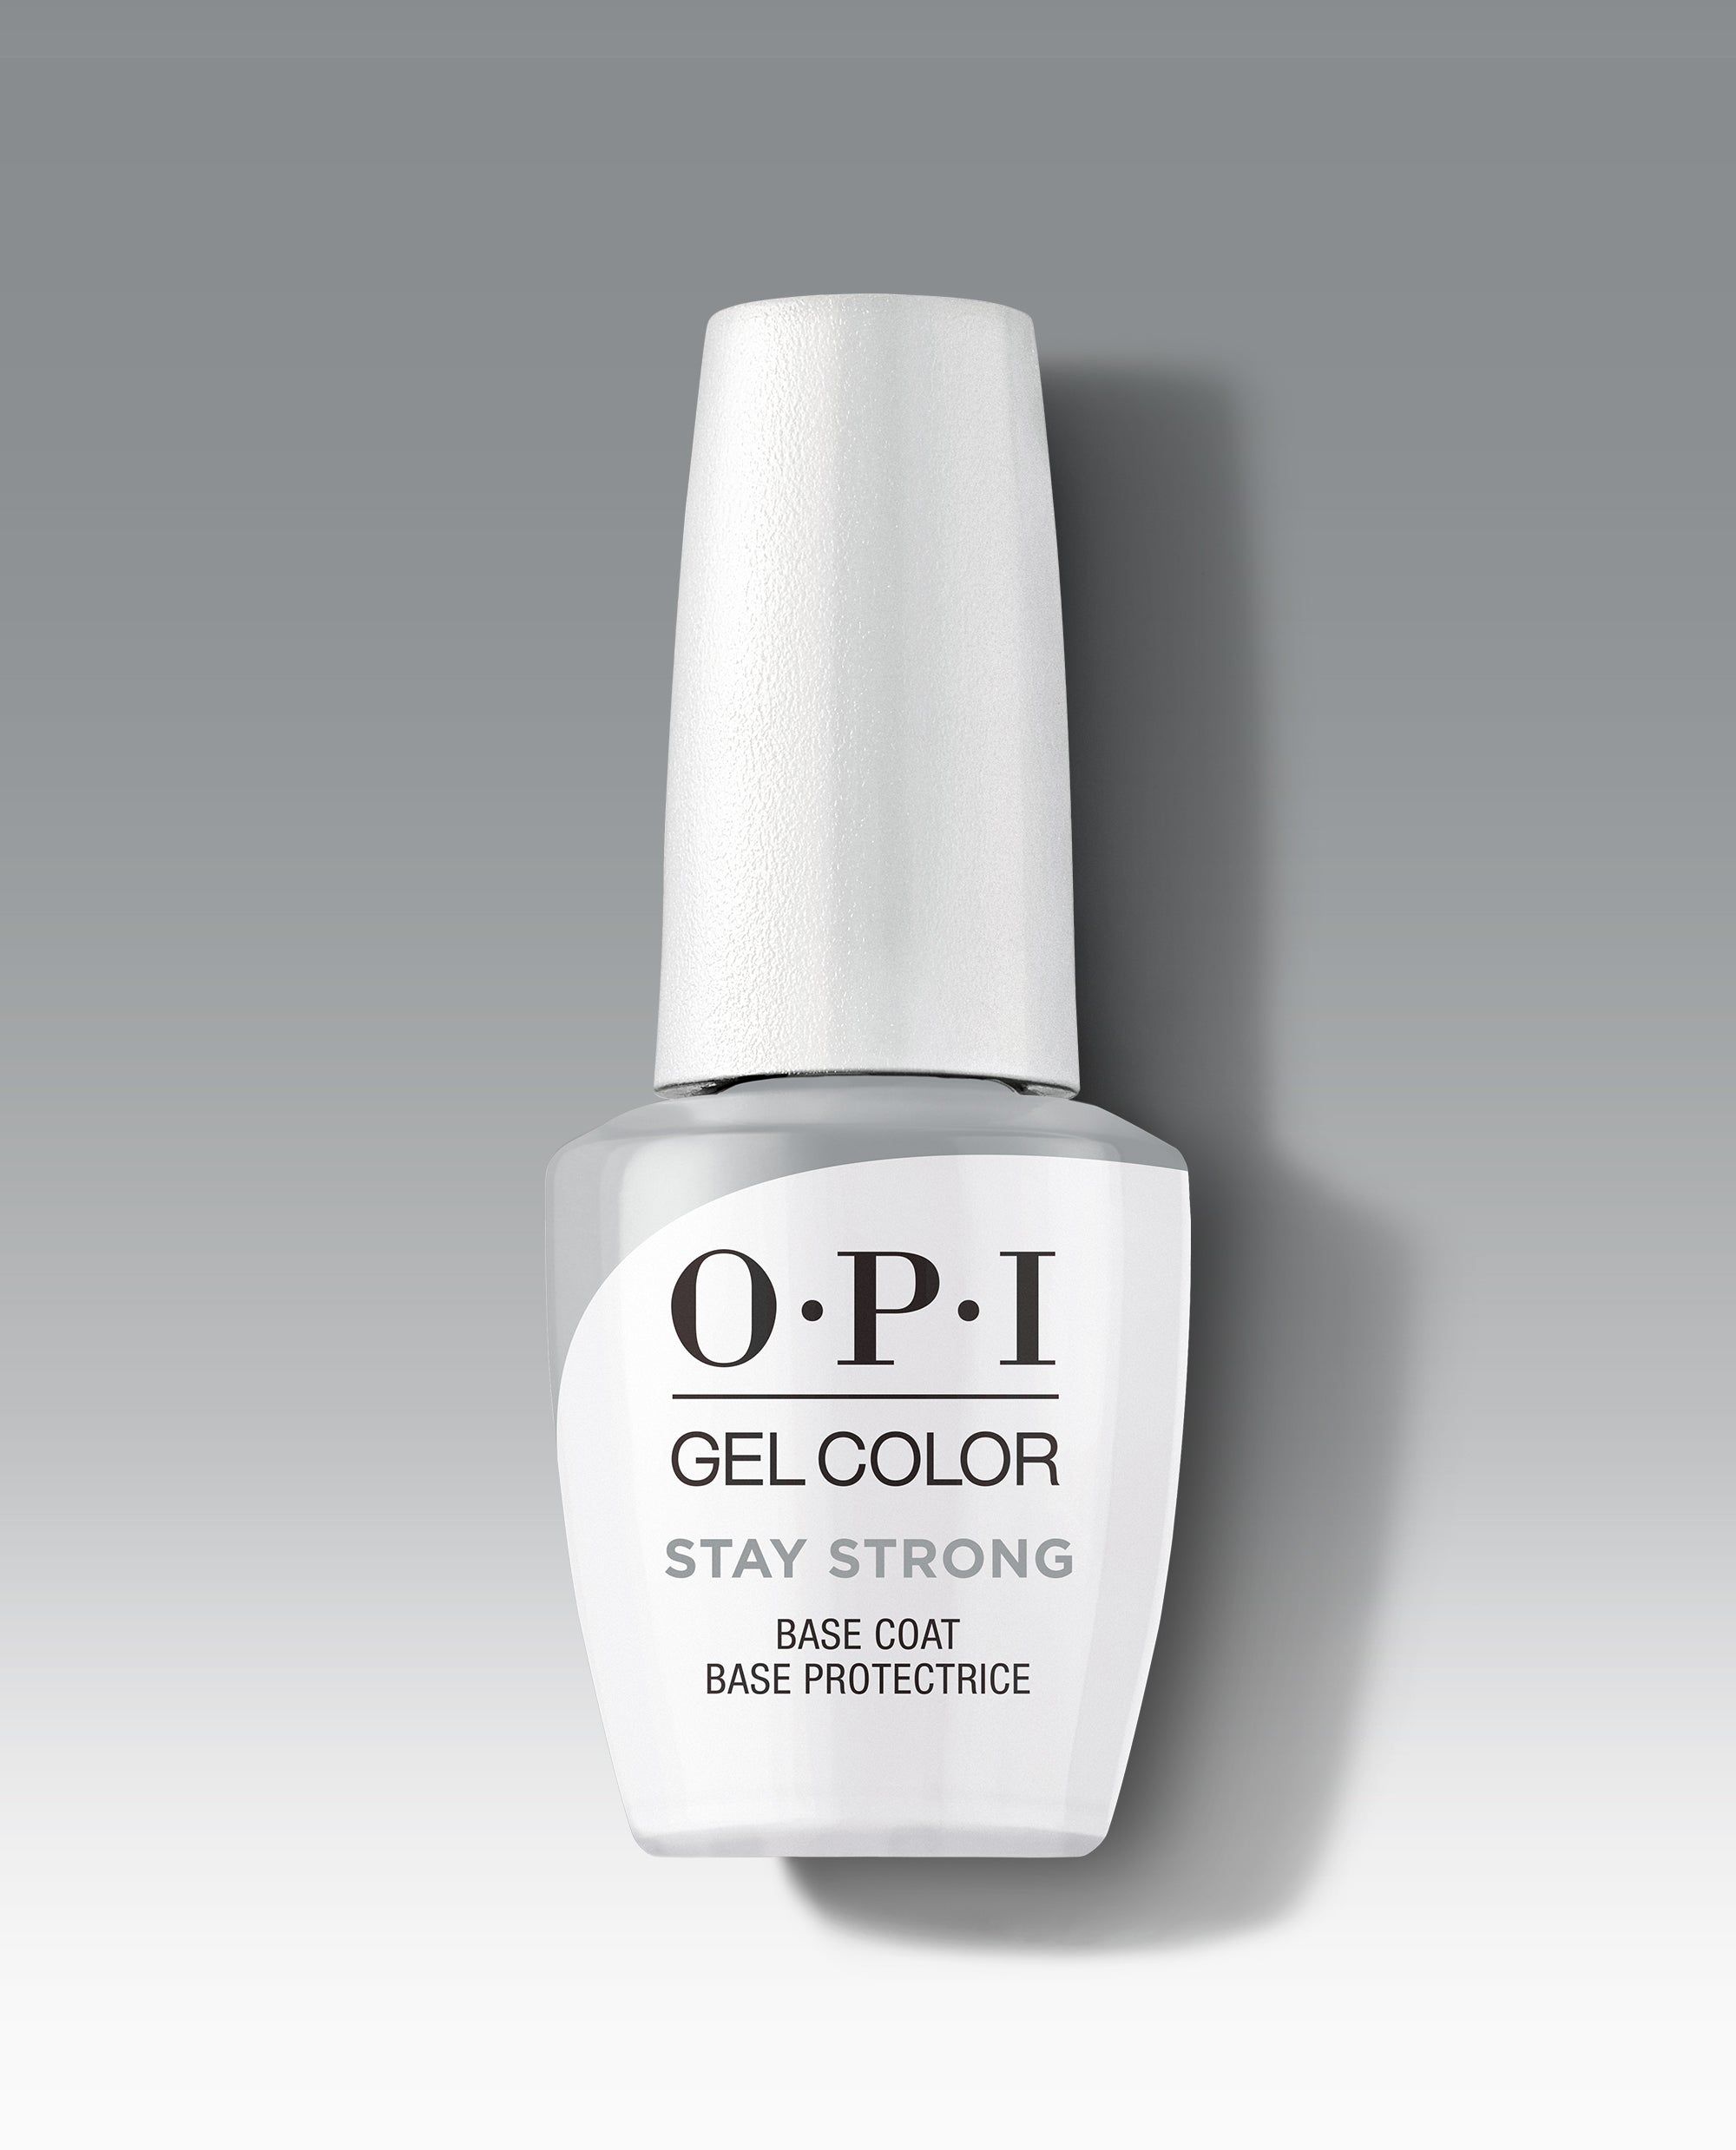 OPI GelColor Stay Strong Strengthening Base Coat Gel Nail Polish | OPI